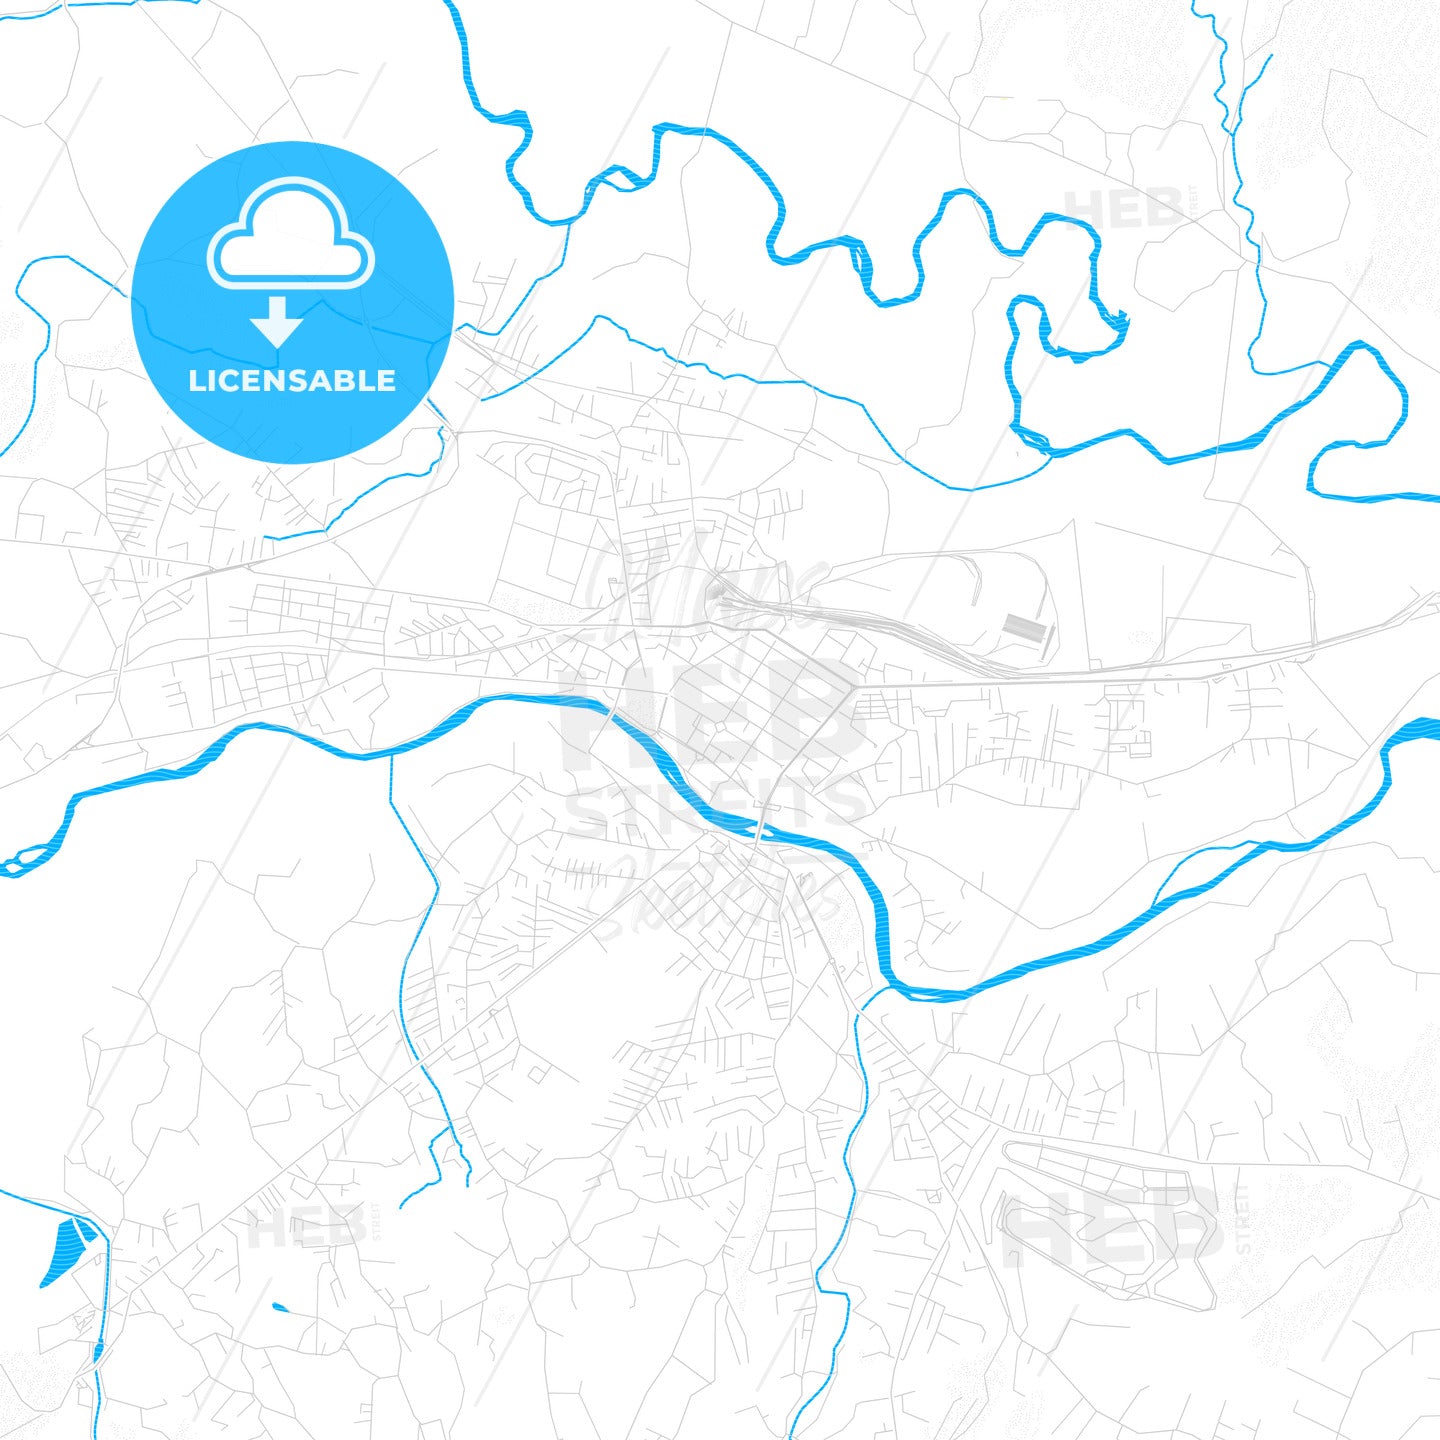 Kraljevo, Serbia PDF vector map with water in focus